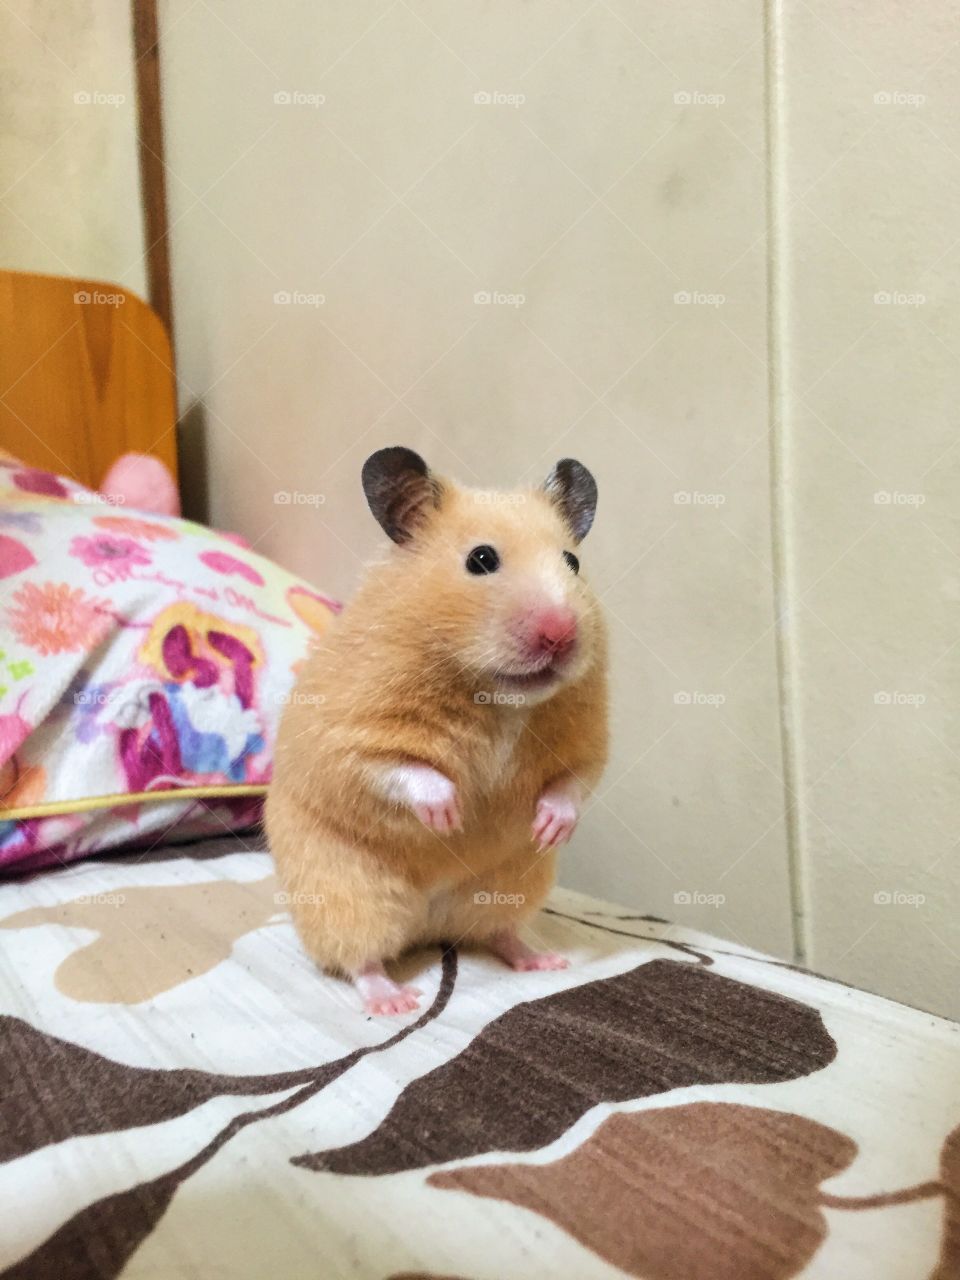 My little hamster